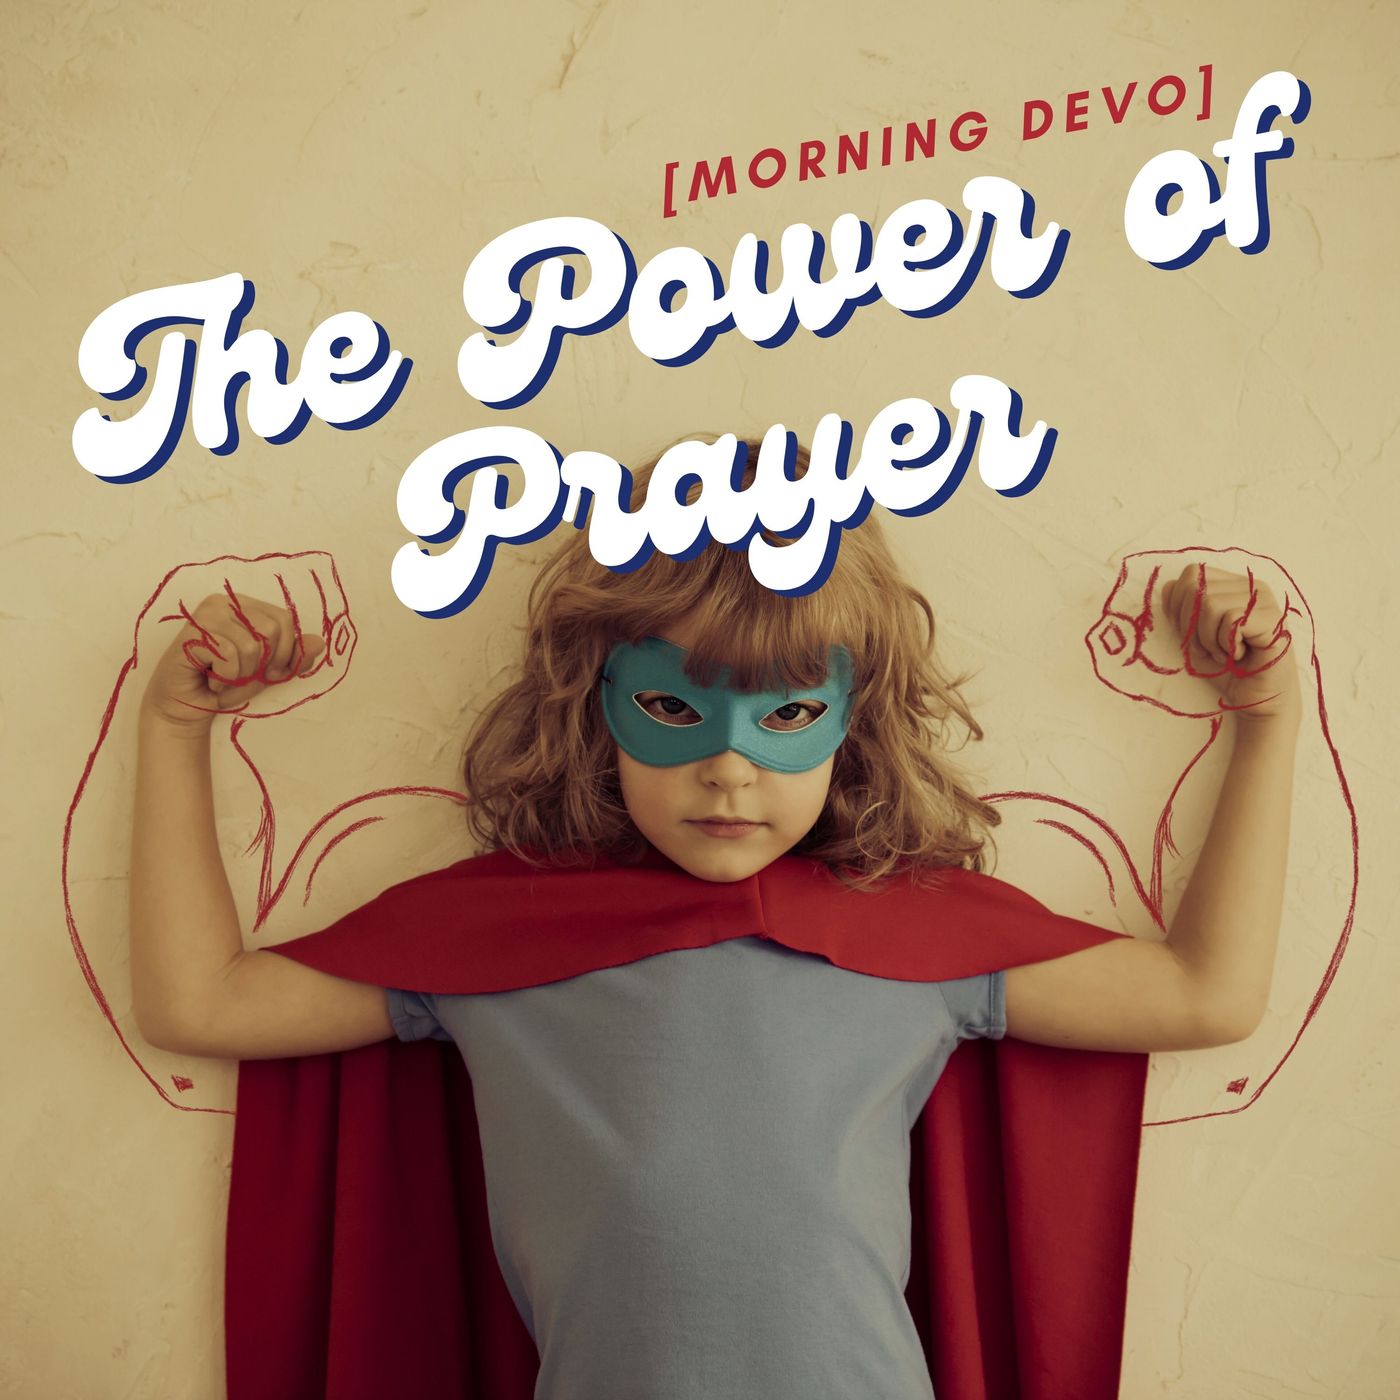 The Power of Prayer [Morning Devo]